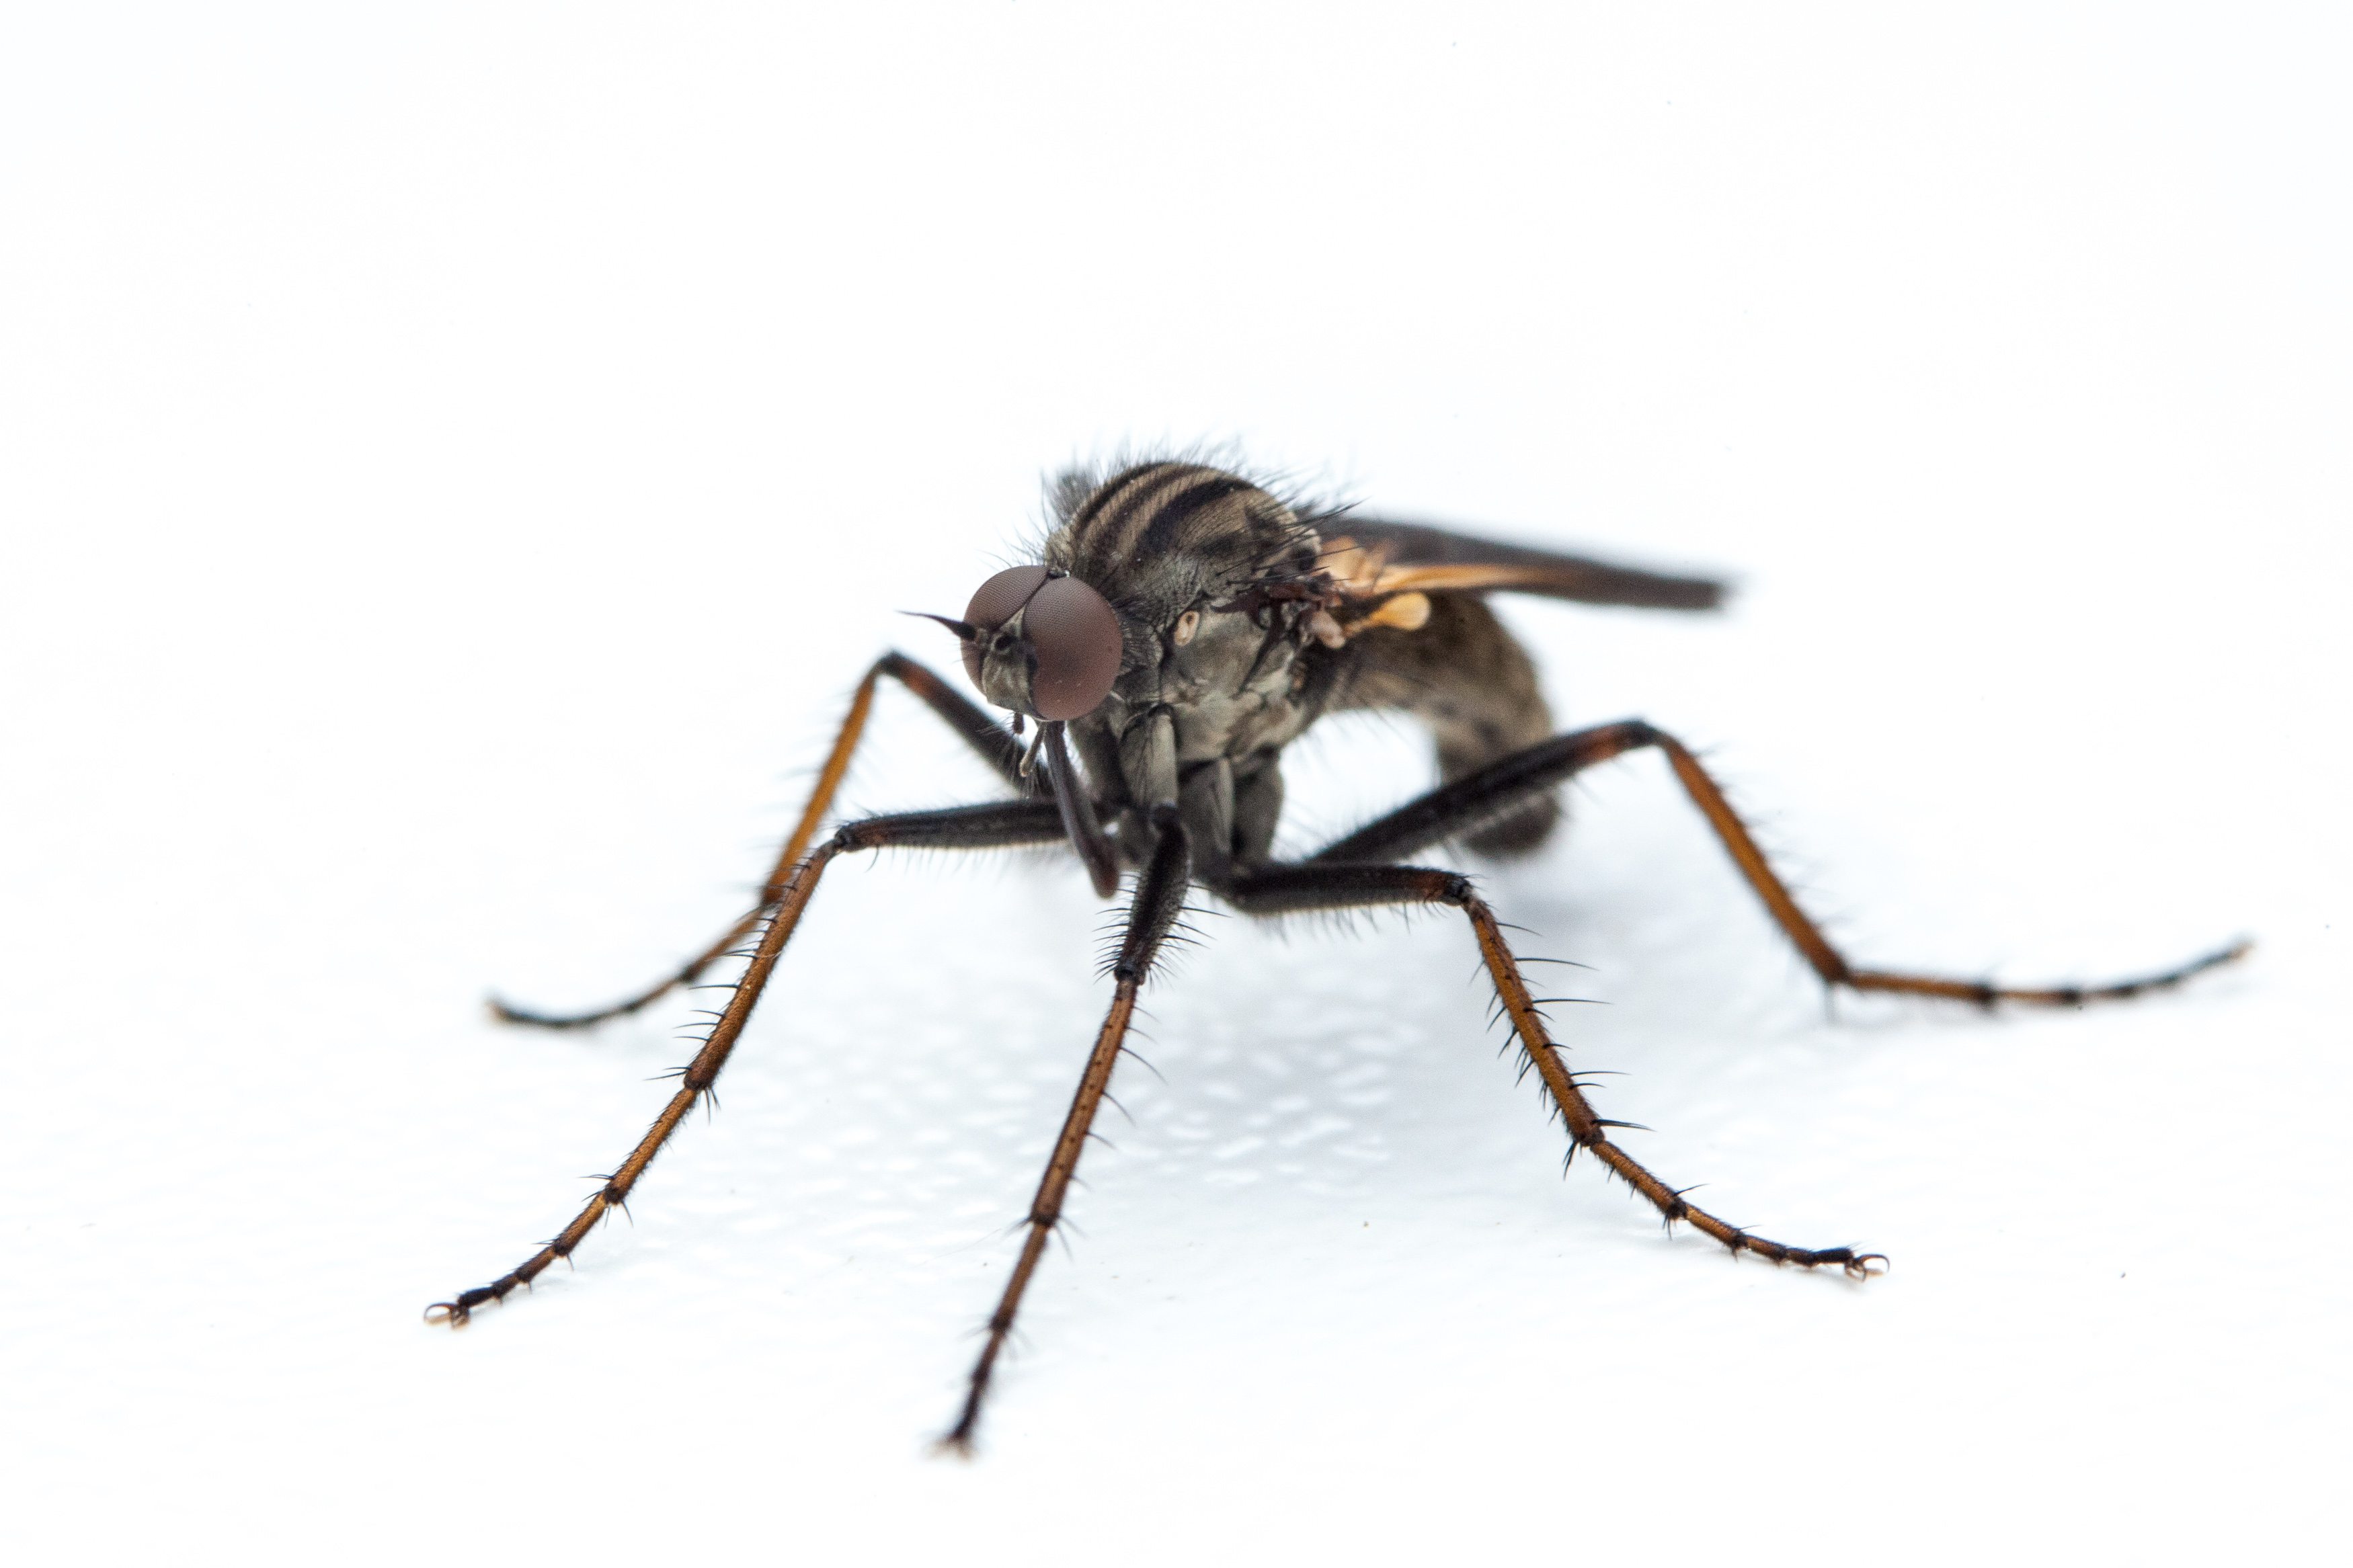 Macro photo of a common mosquito